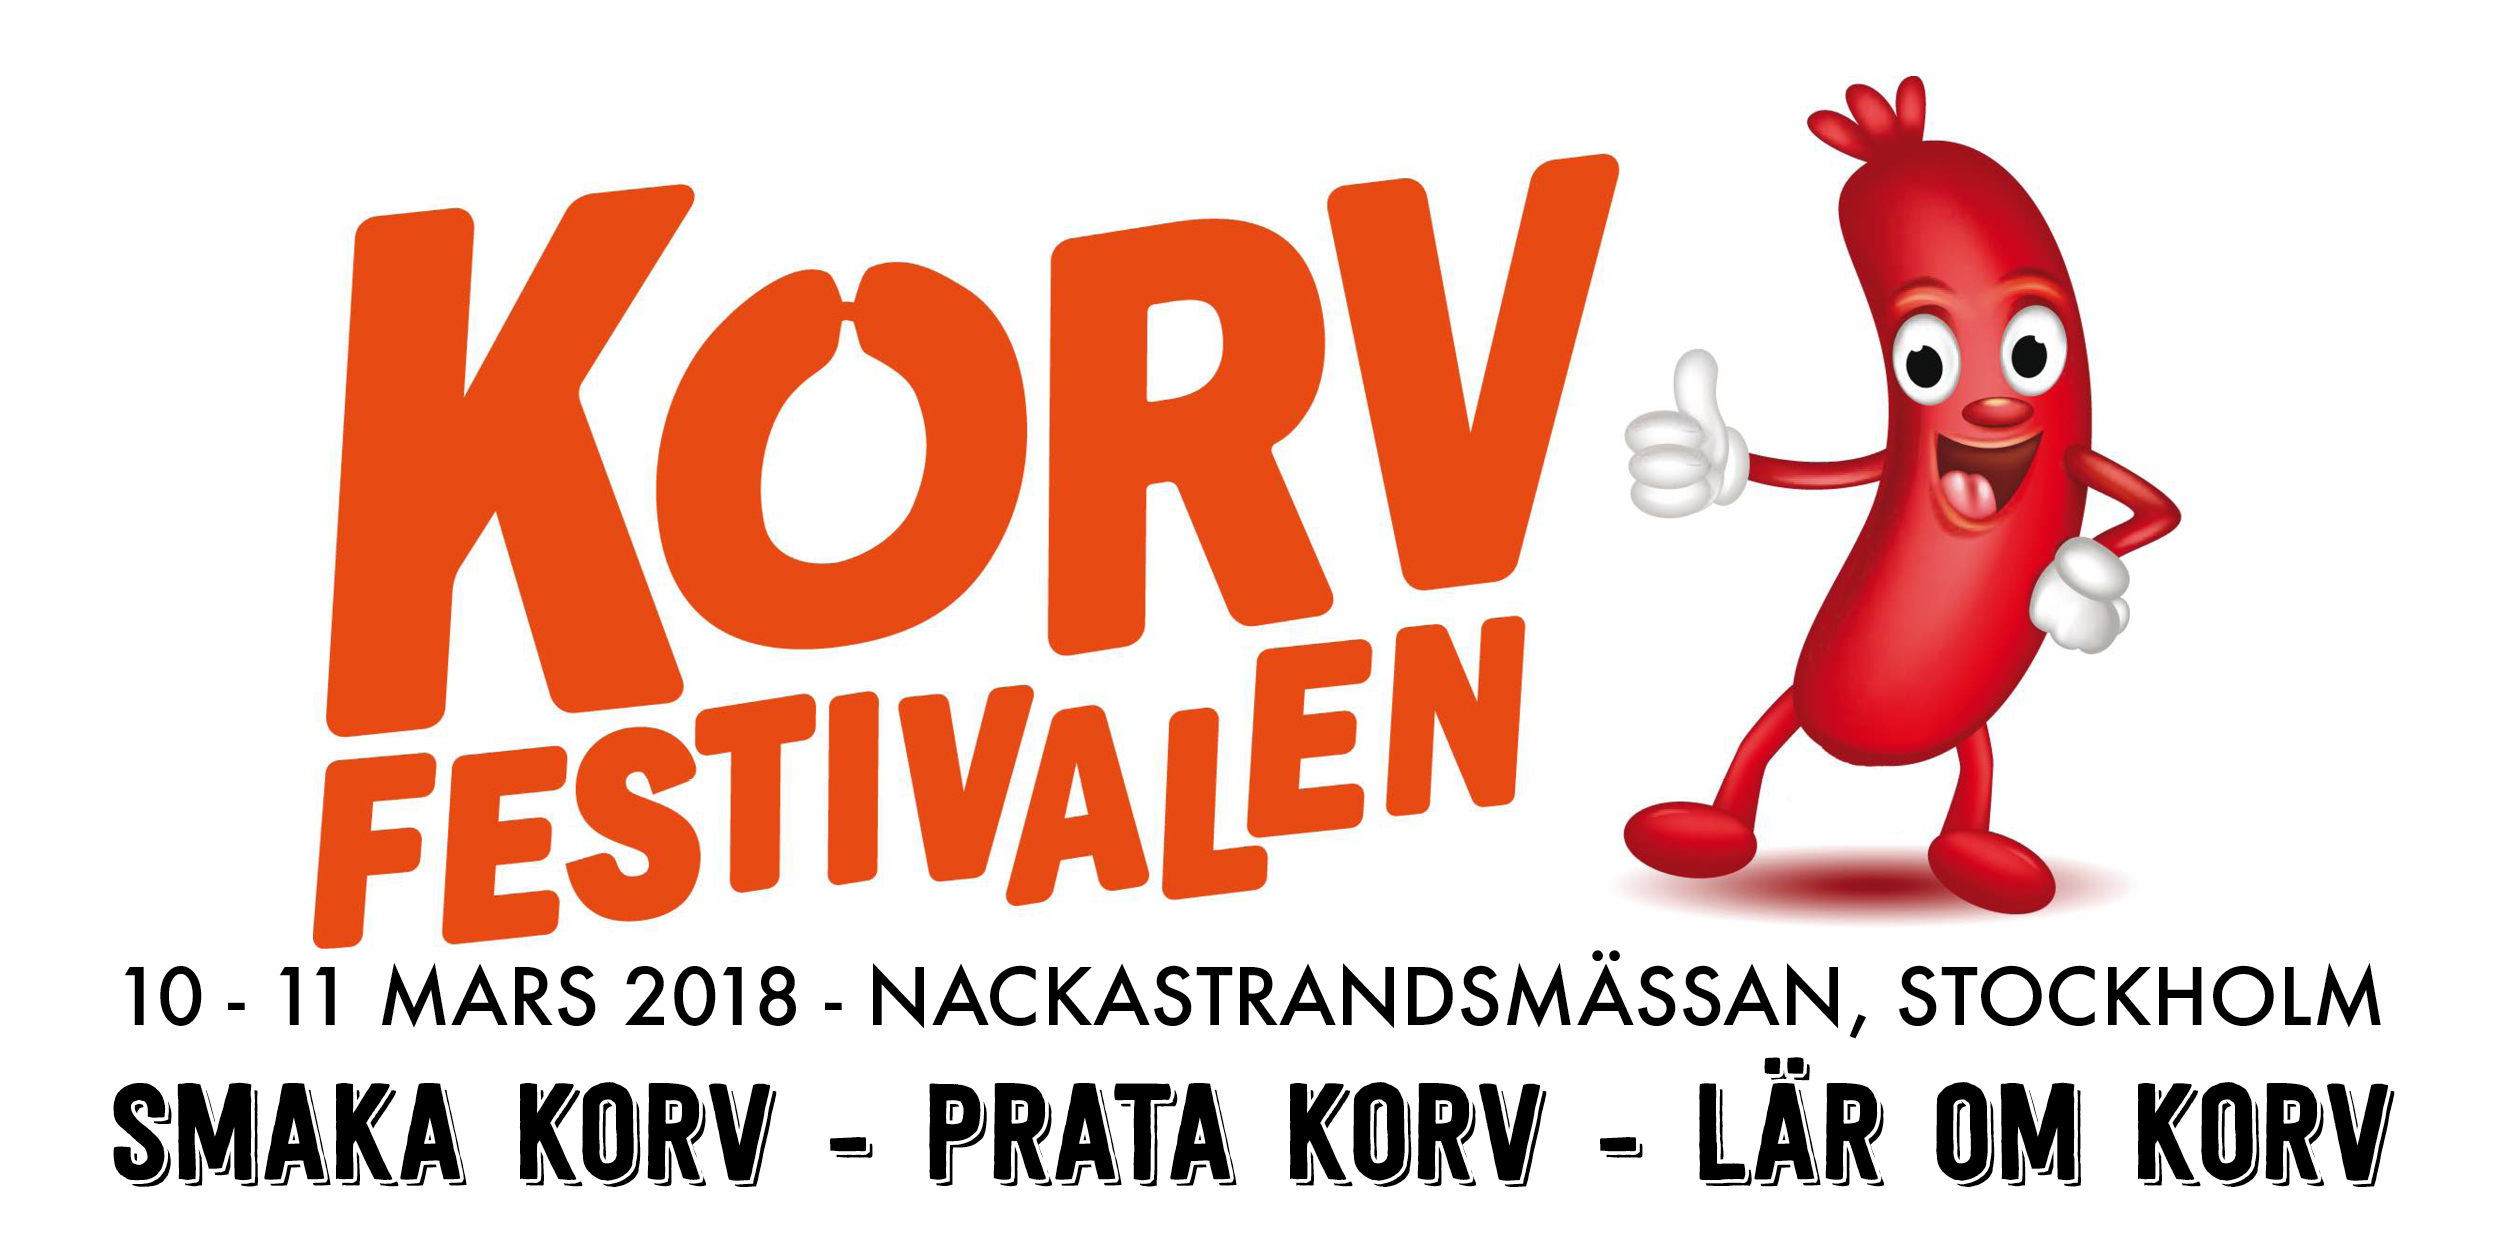 korvfestivalen logo big 2018